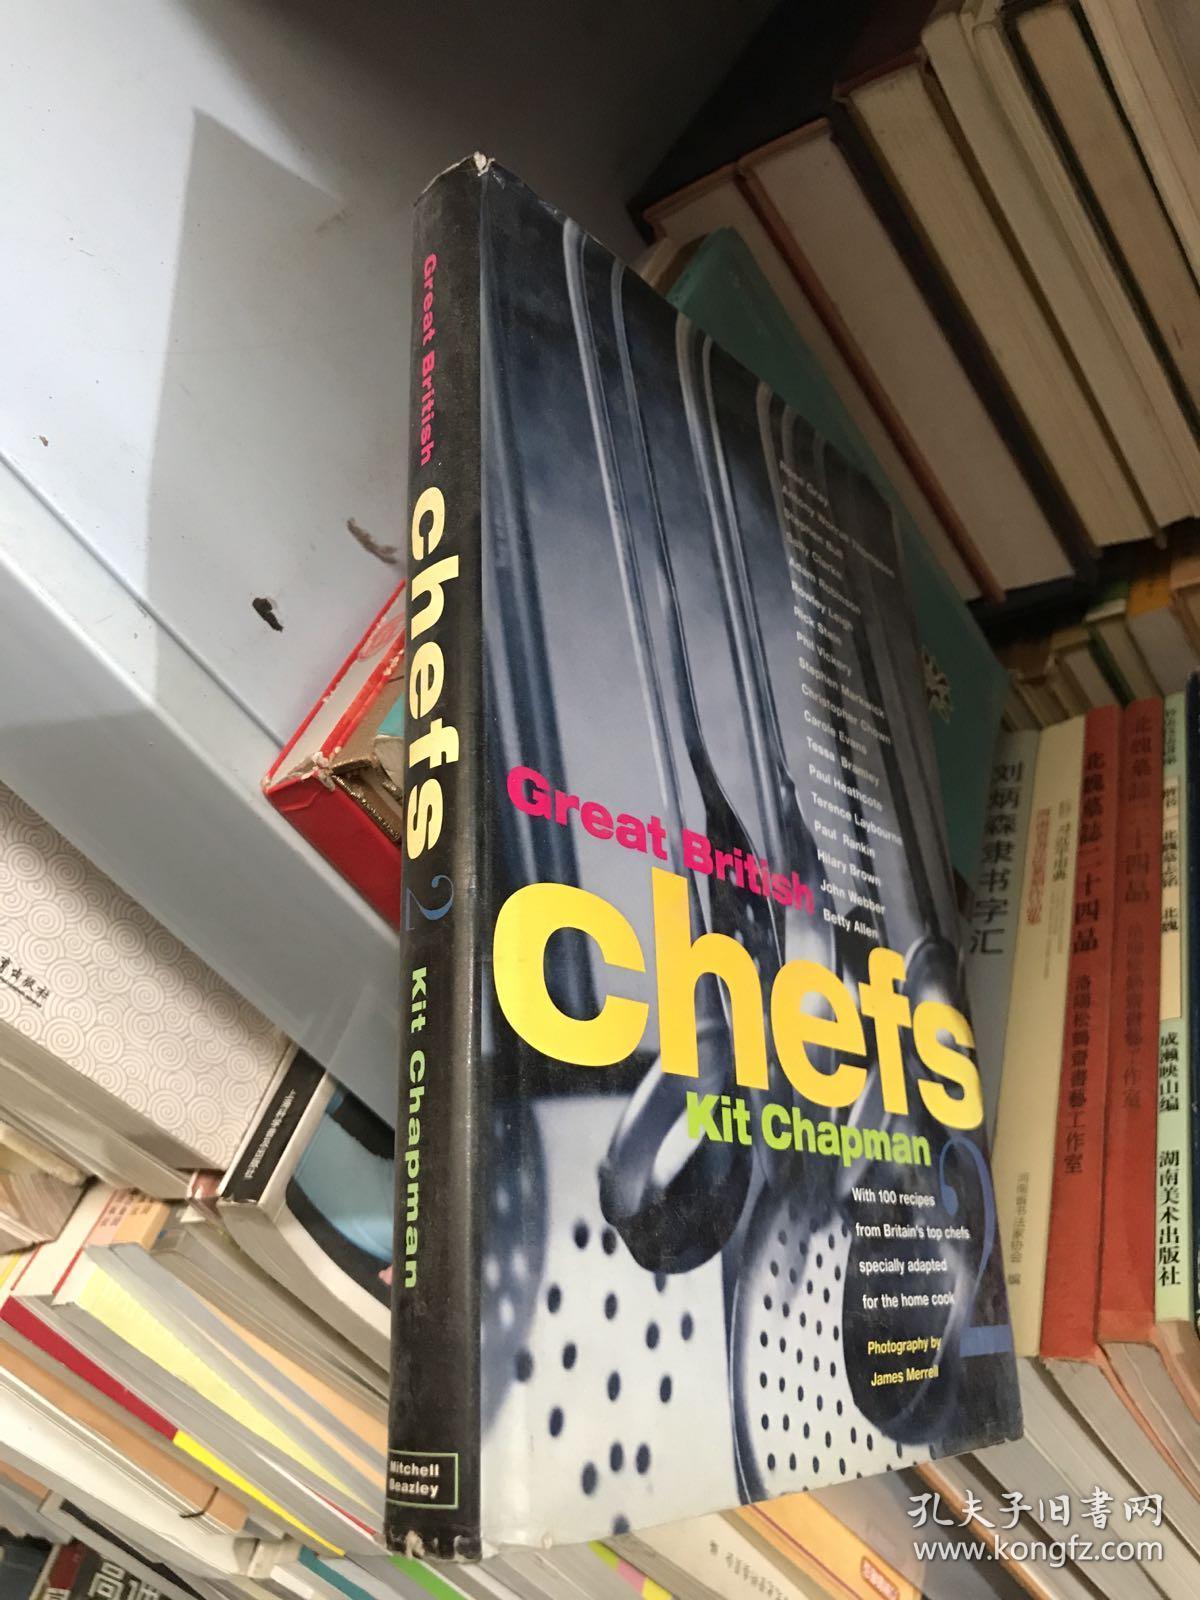 Great British Chefs 2 kit chapman